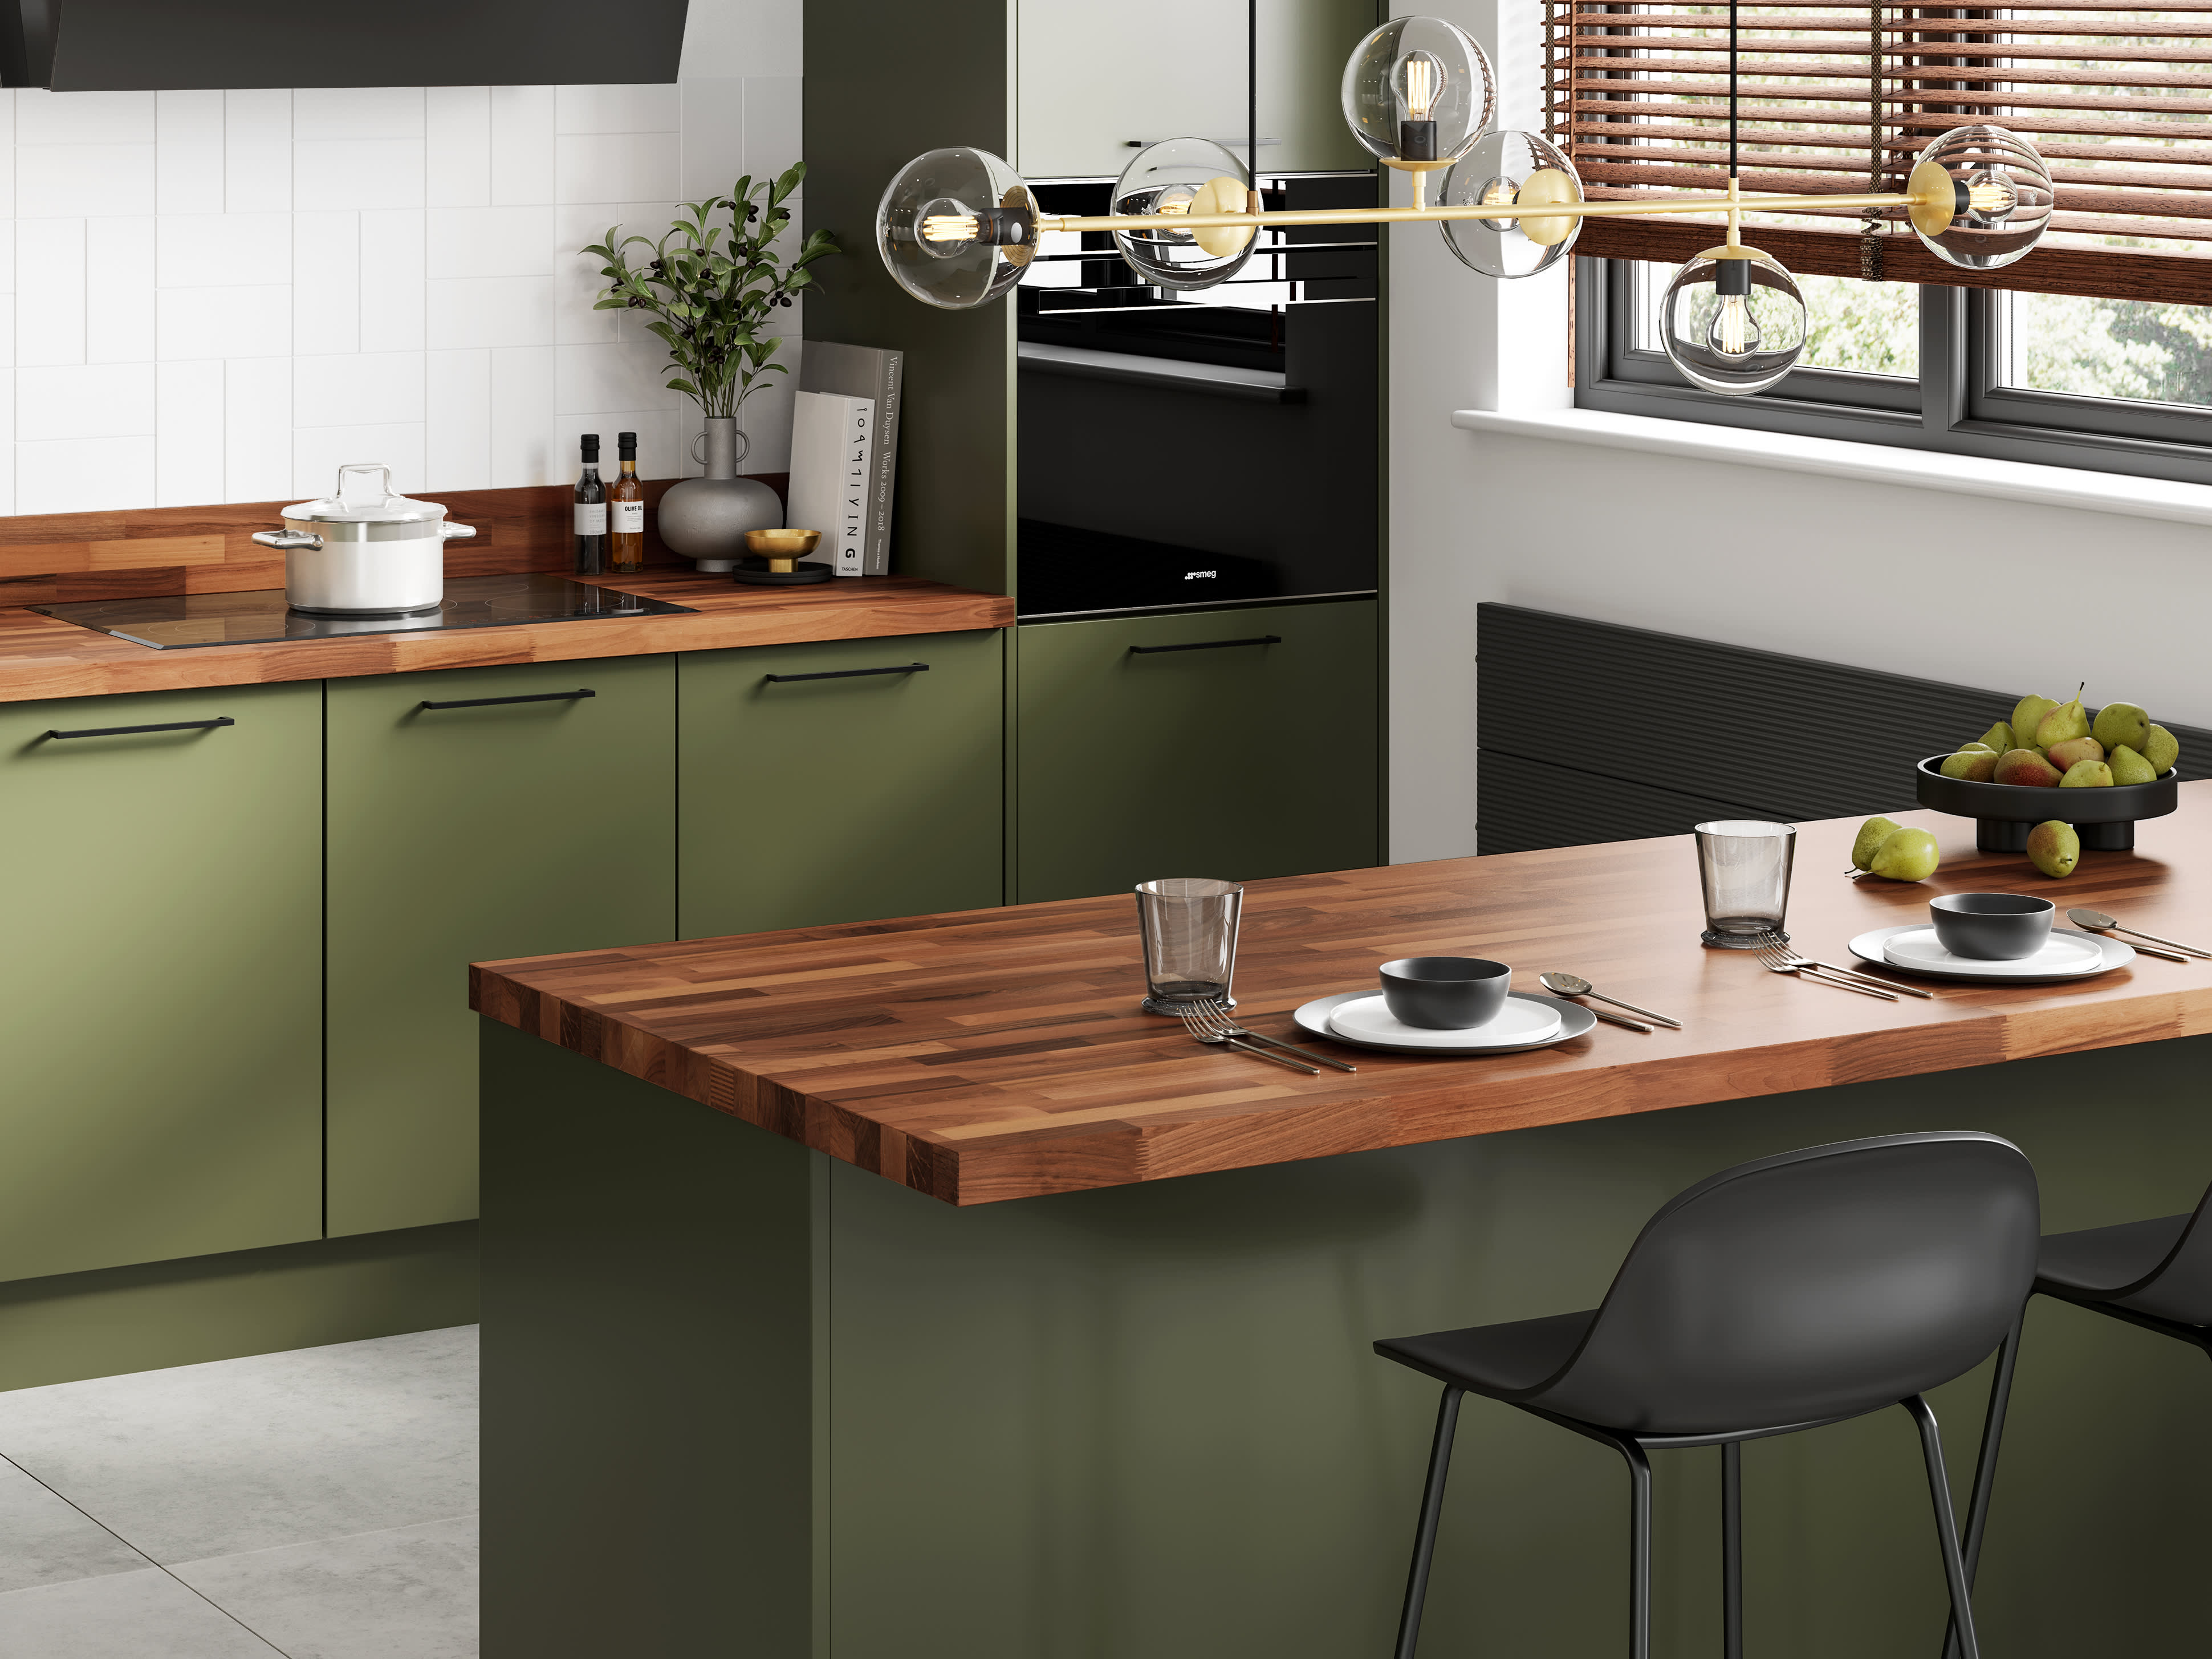 Walnut solid wooden worktops in green kitchen with breakfast bar